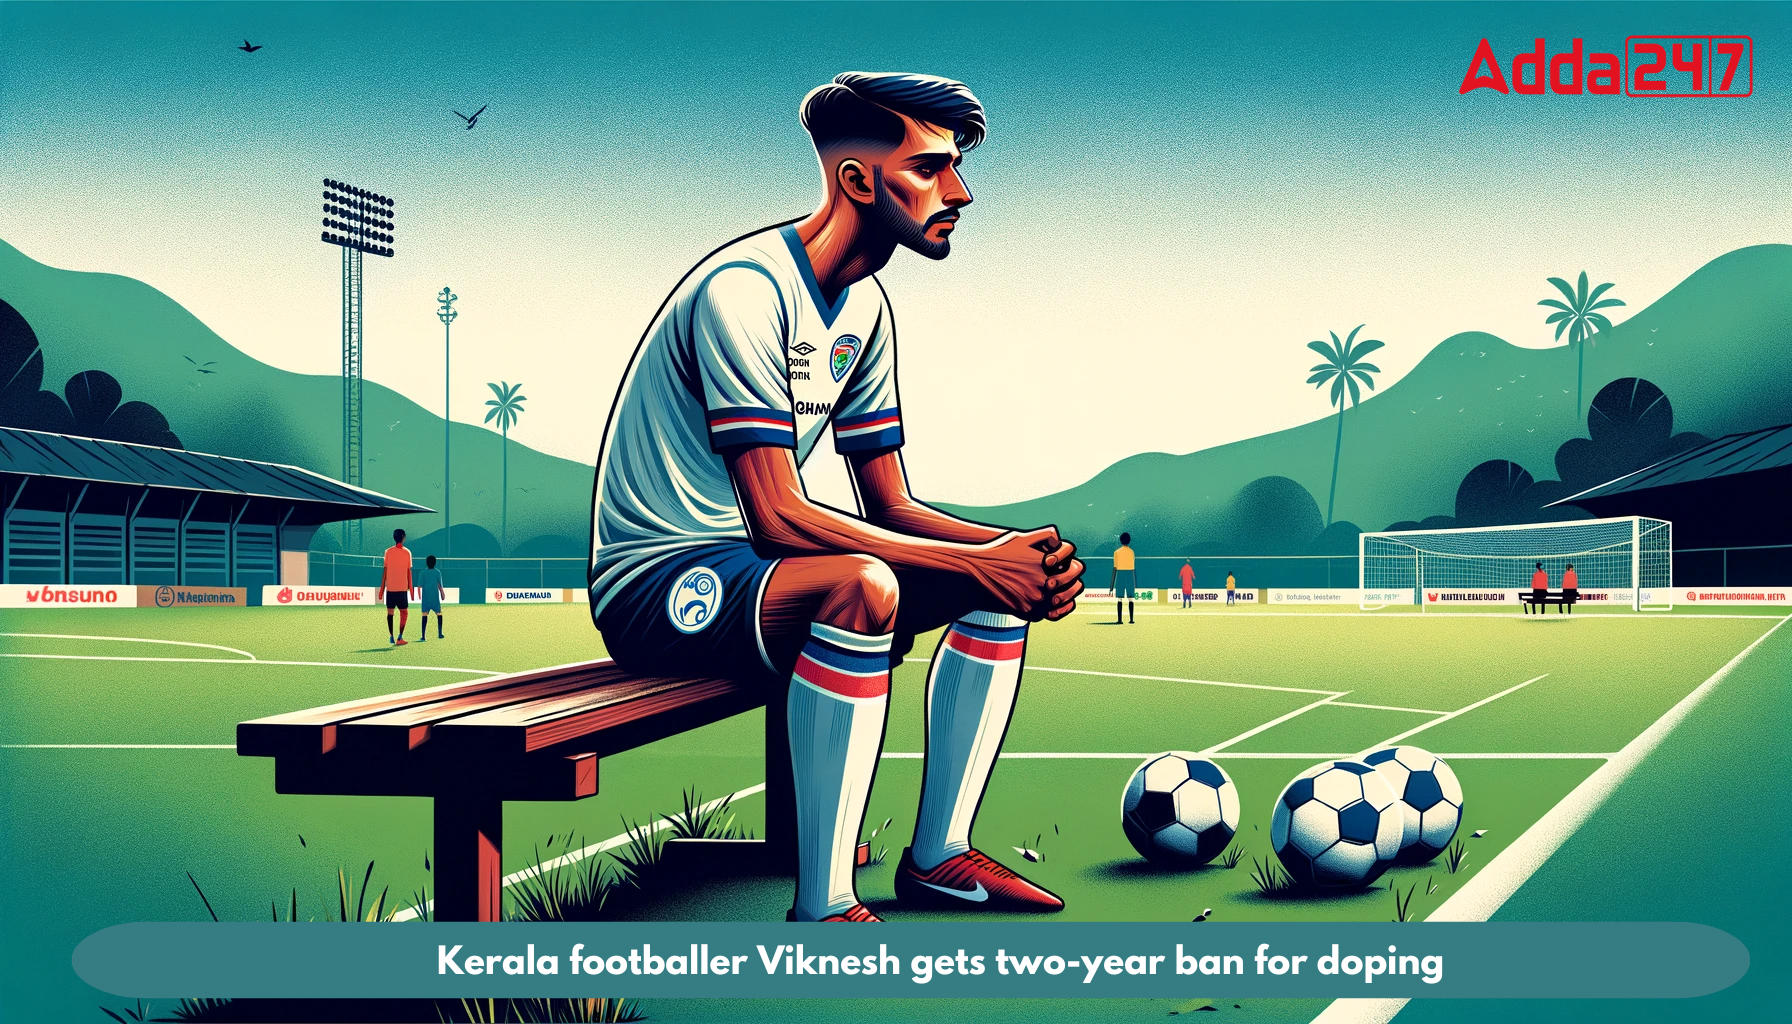 Kerala footballer Viknesh gets two-year ban for doping